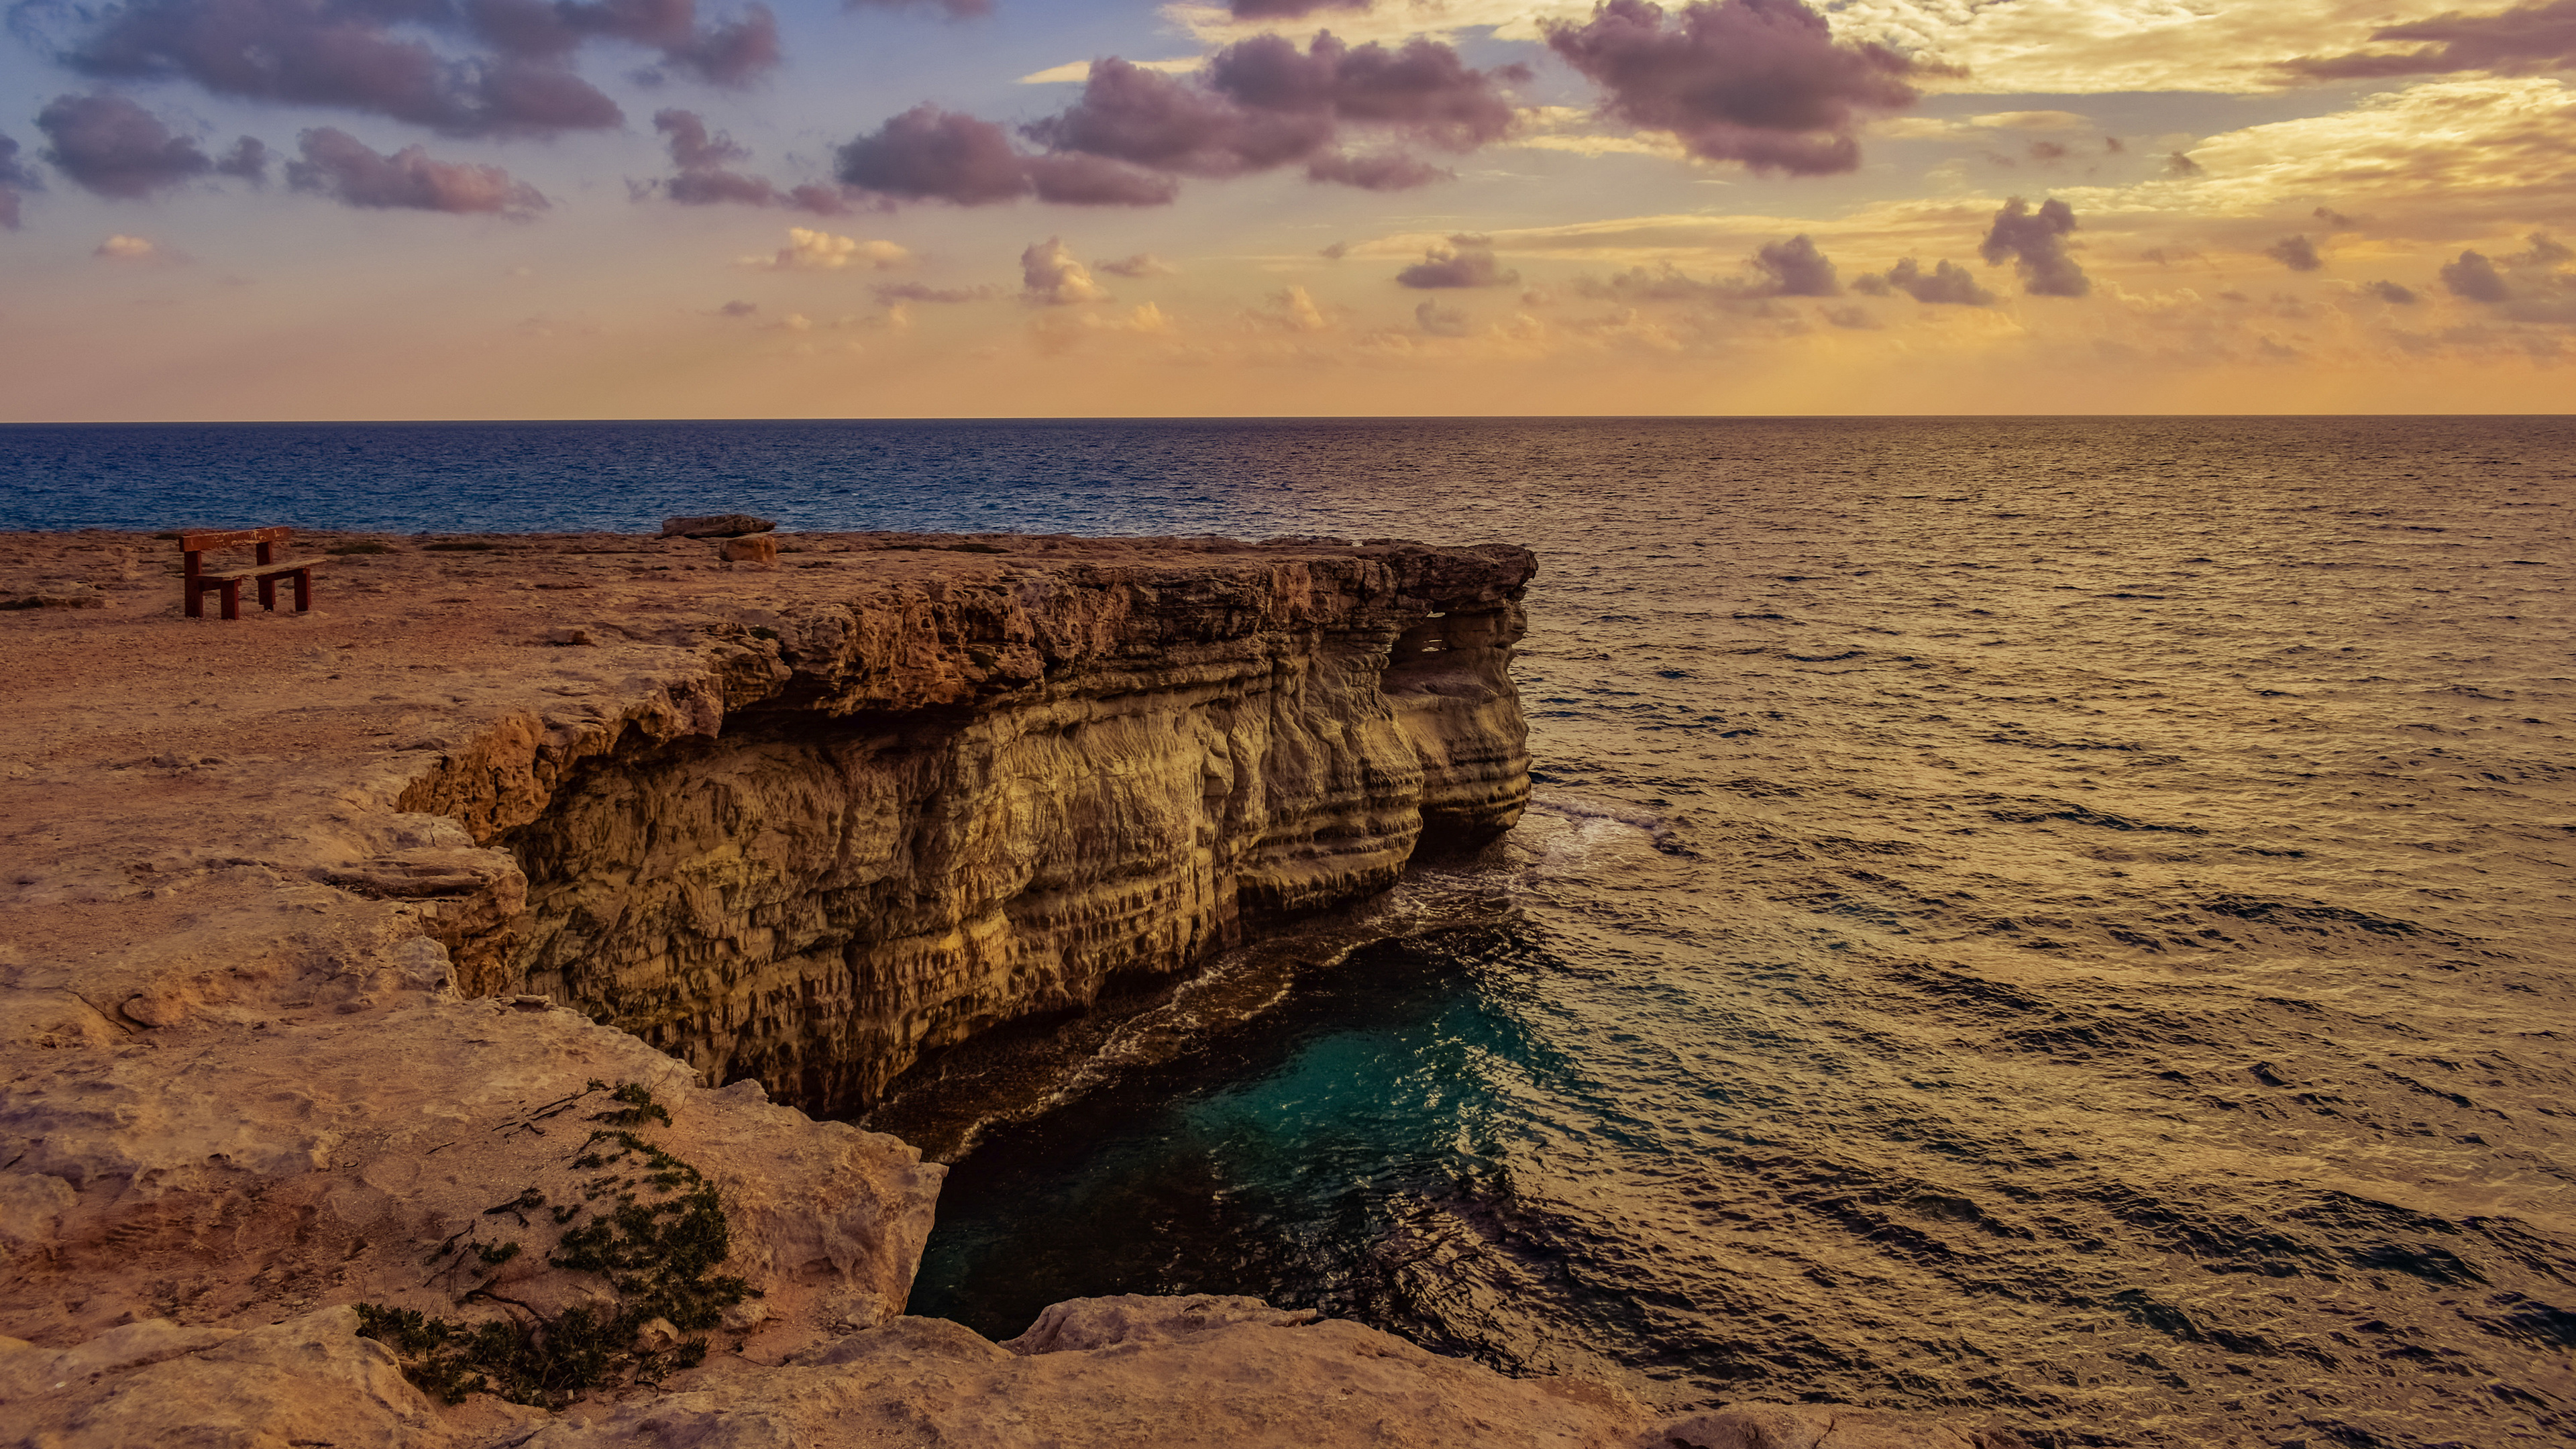 Cyprus sea cliffs, Free desktop background, Explore Cyprus, Cyprus flag, 3840x2160 4K Desktop